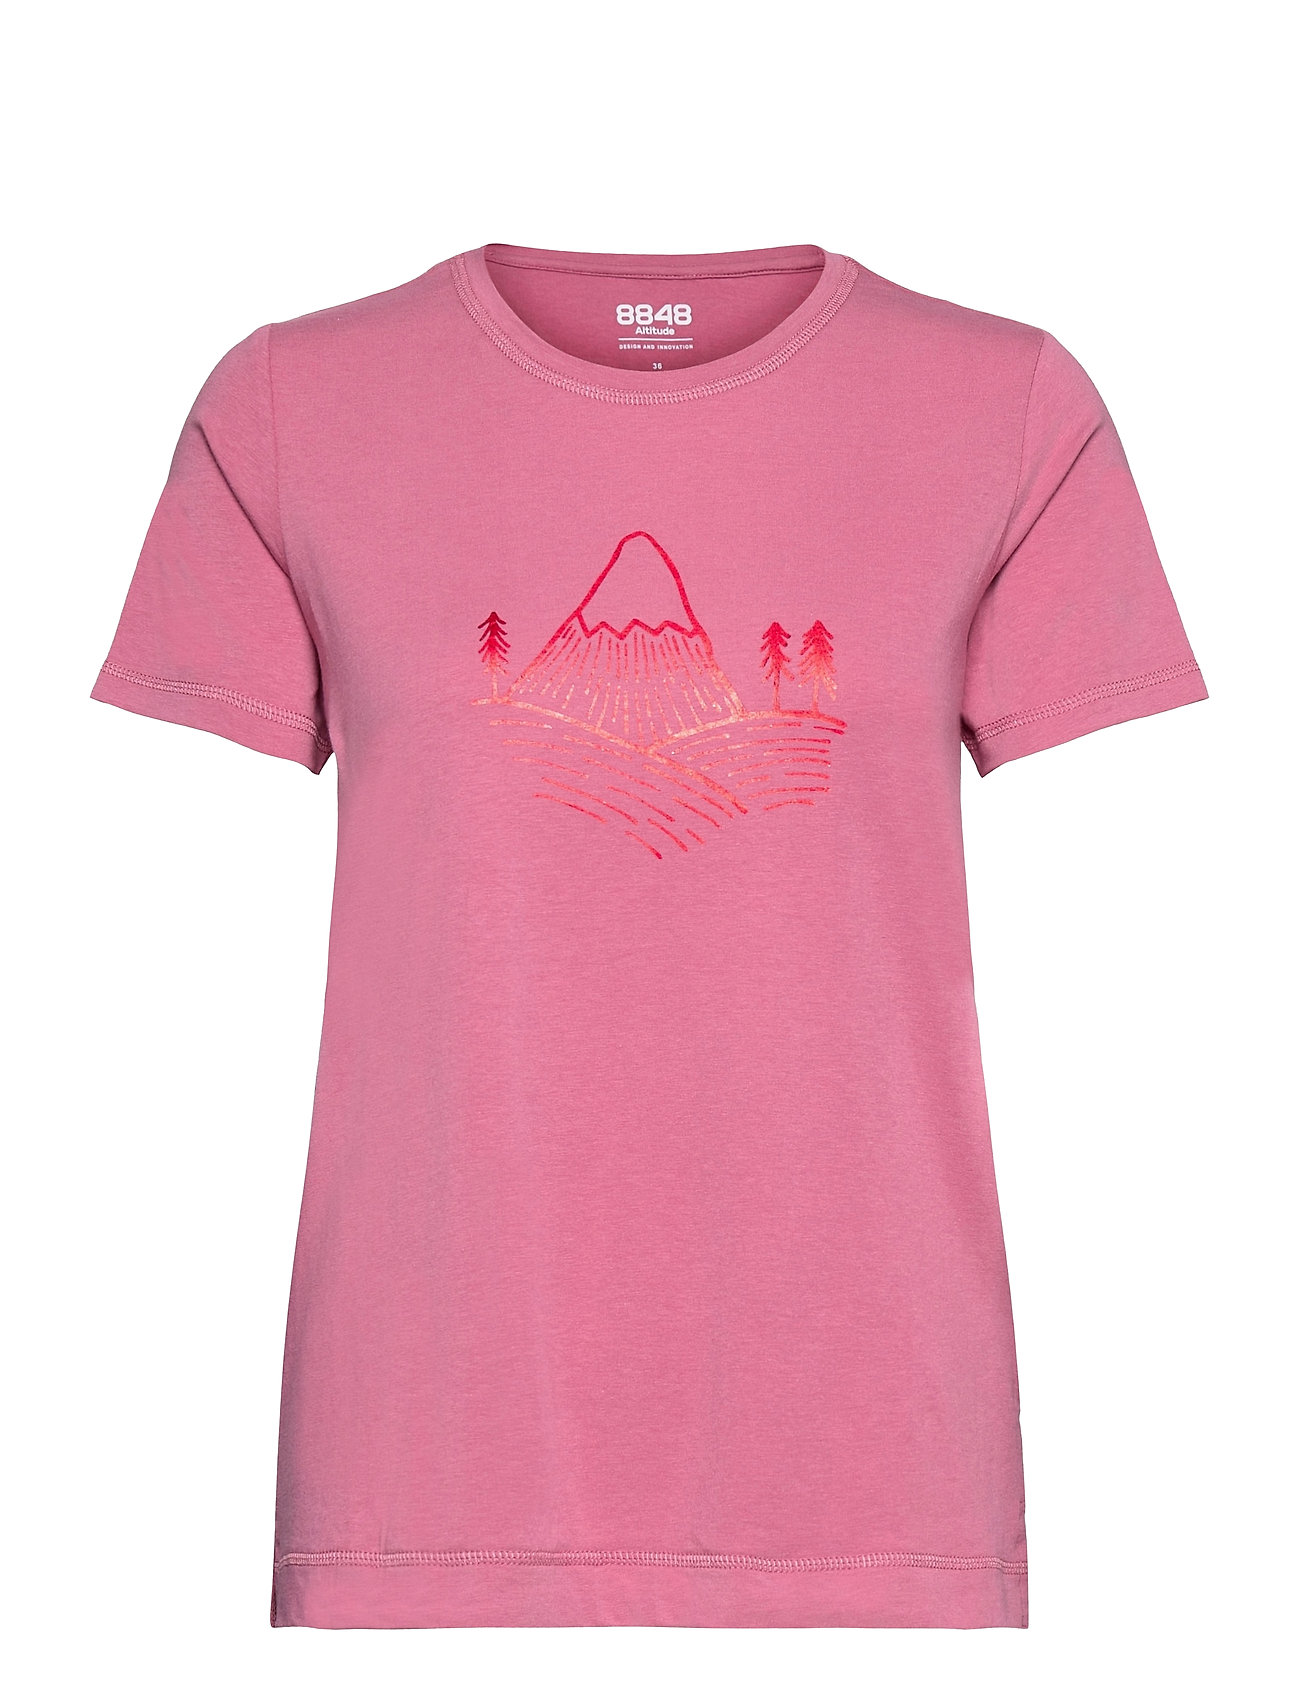 Leiria W Tee T-shirts & Tops Short-sleeved Vaaleanpunainen 8848 Altitude